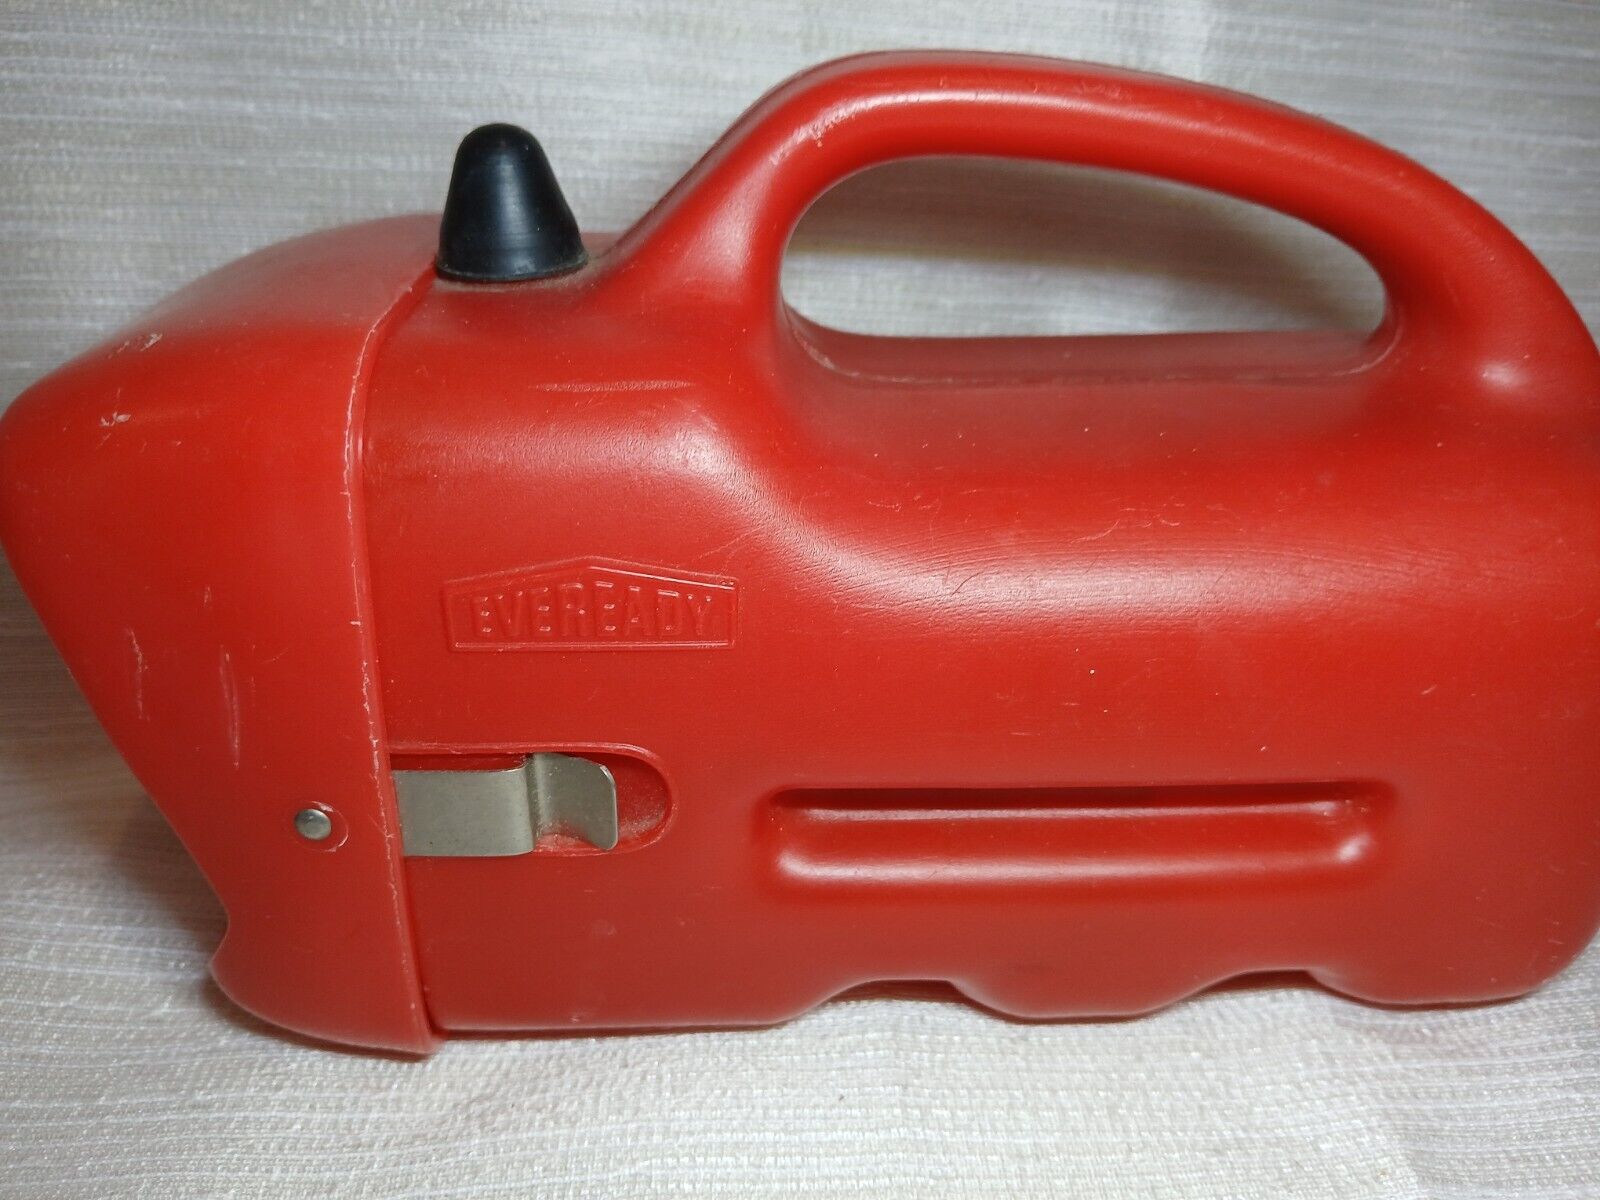 Vintage Eveready Red Floating Flashlight #108 6-volt Lantern Plastic Tested